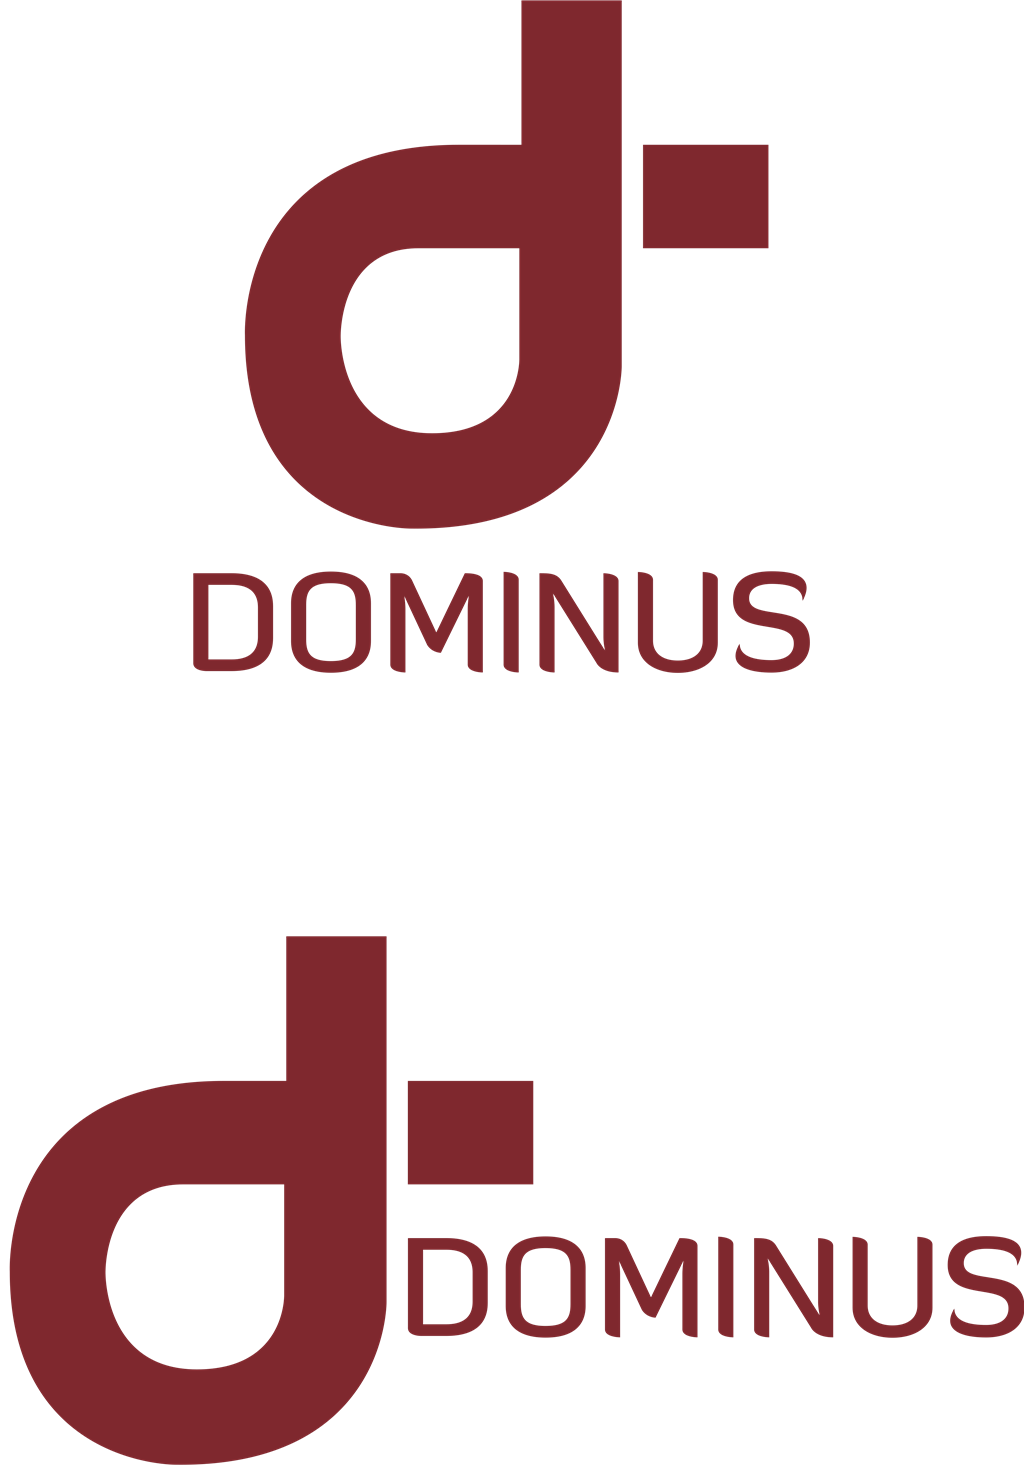 Banda Dominus logotype, transparent .png, medium, large